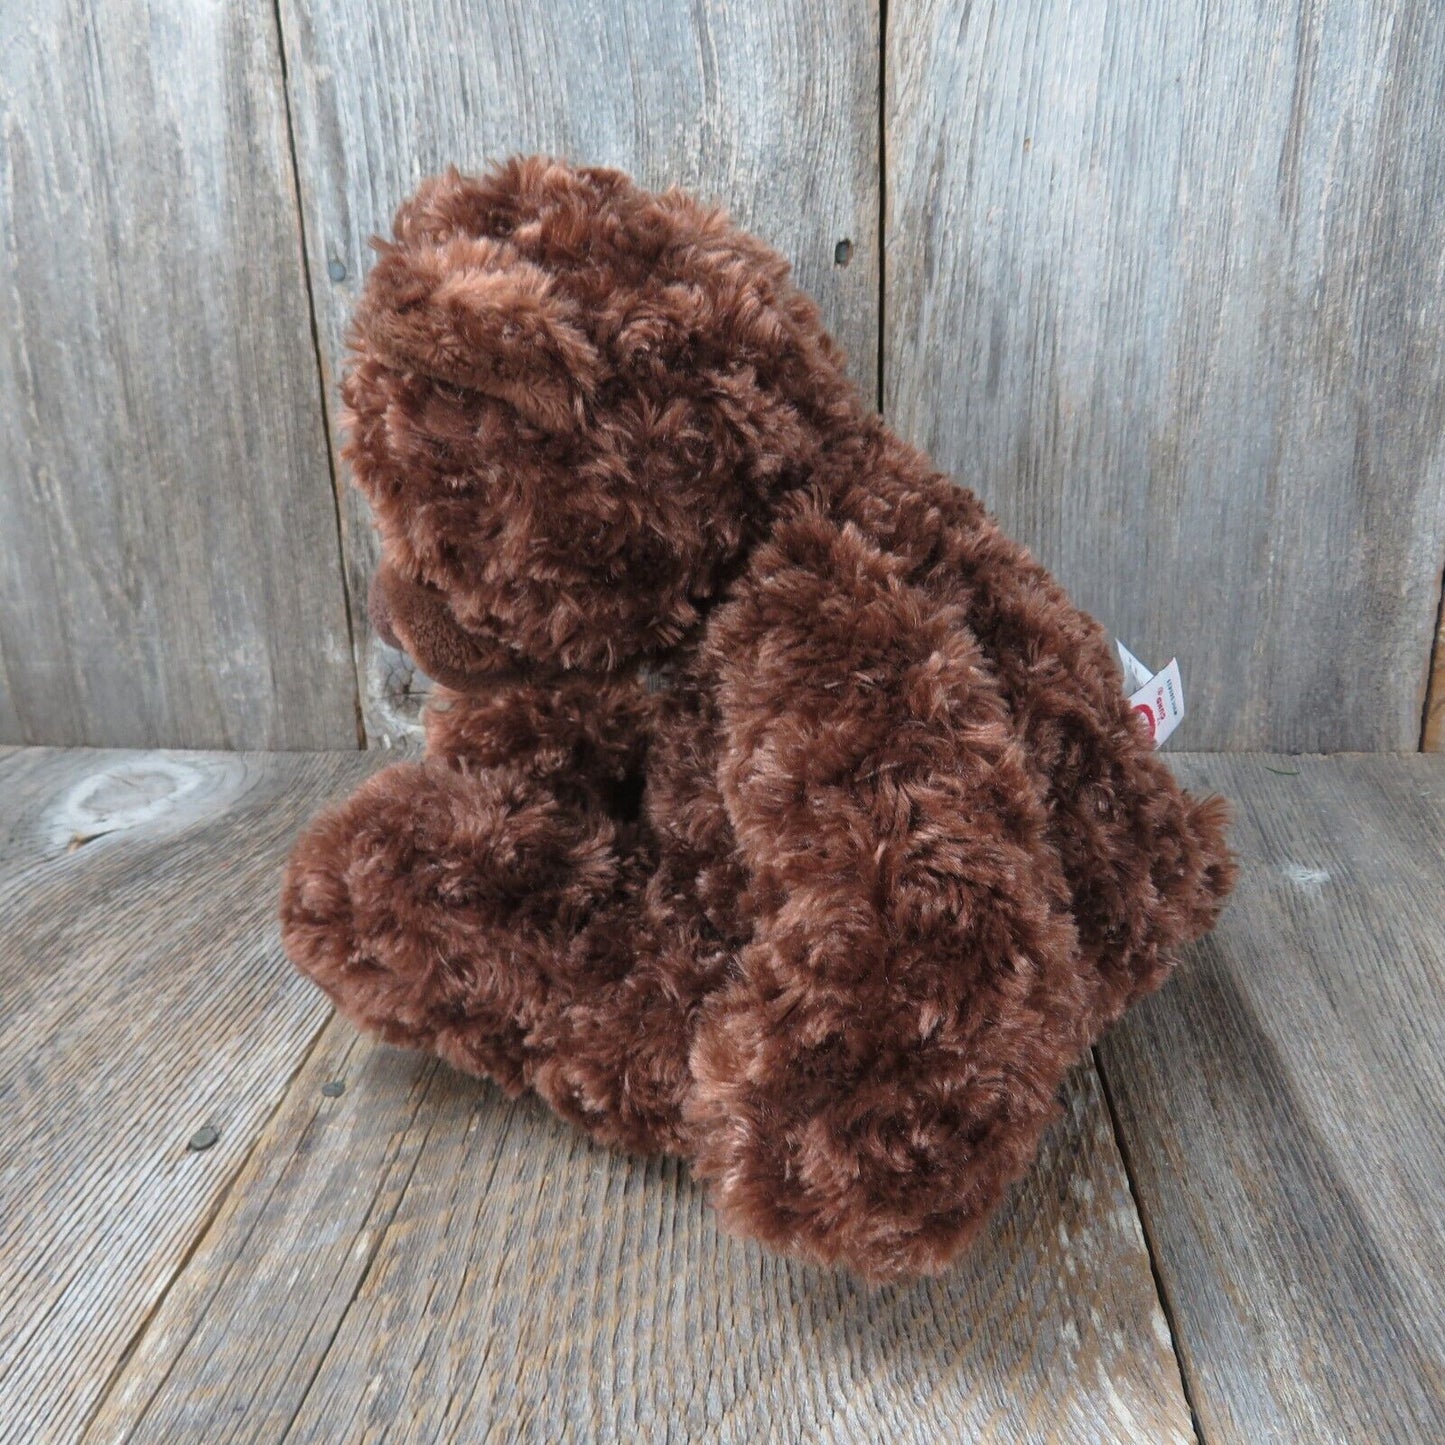 Brown Fuzzy Teddy Bear Plush Gund Shiny Long Hair WIC 348429 Soft Stuffed Animal